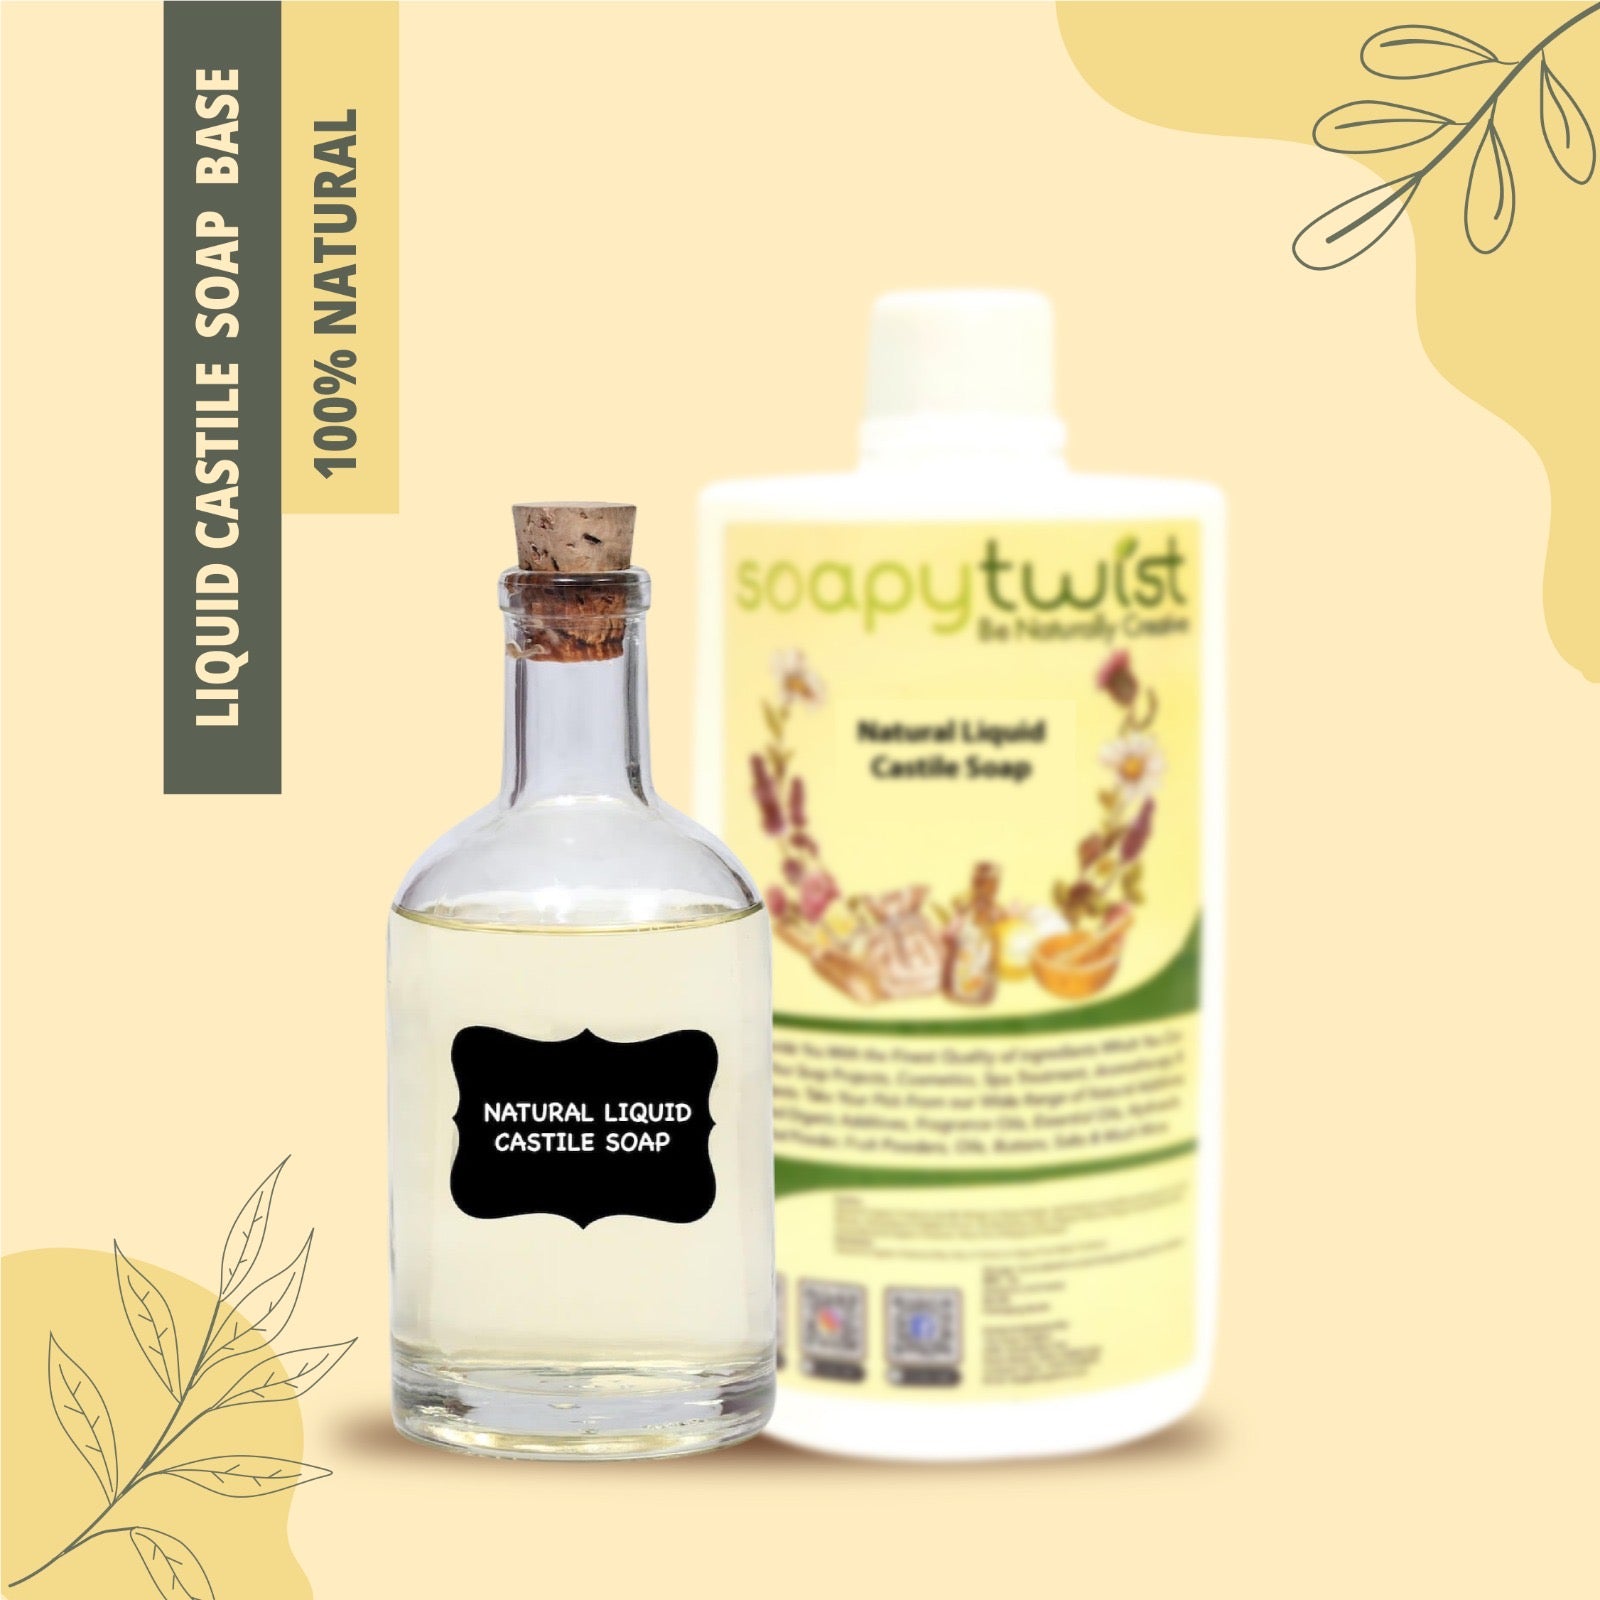 Natural Liquid Castile Soap Base